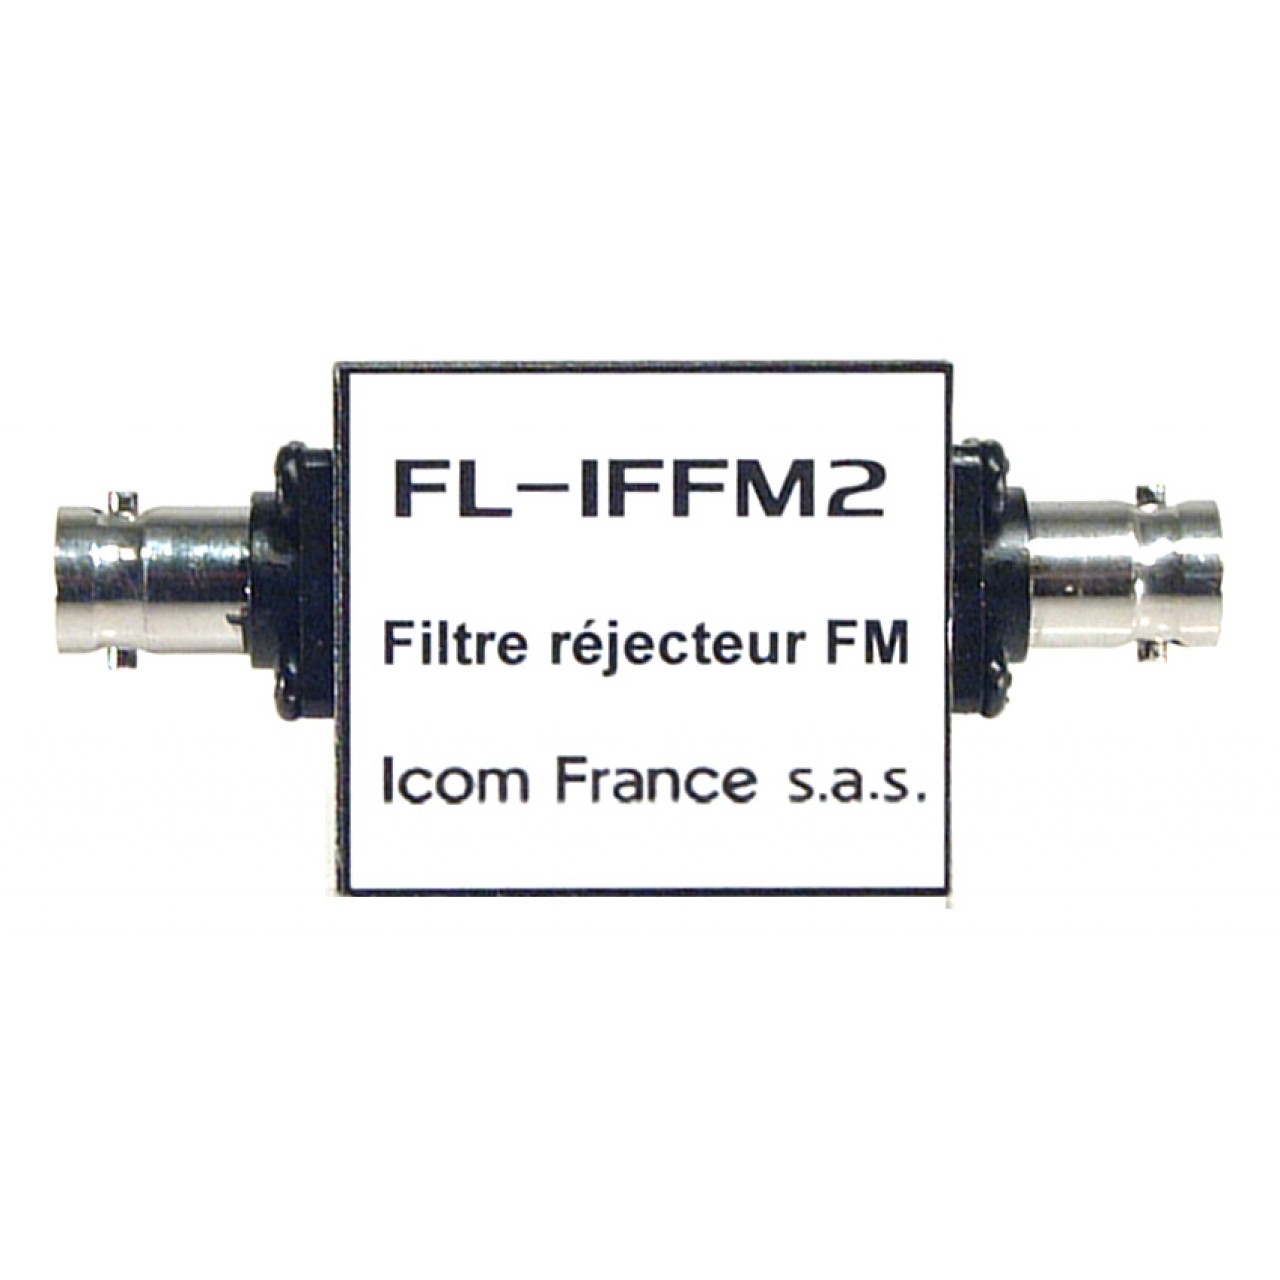 FL-IFFM2 Platinums and filters - ICOM